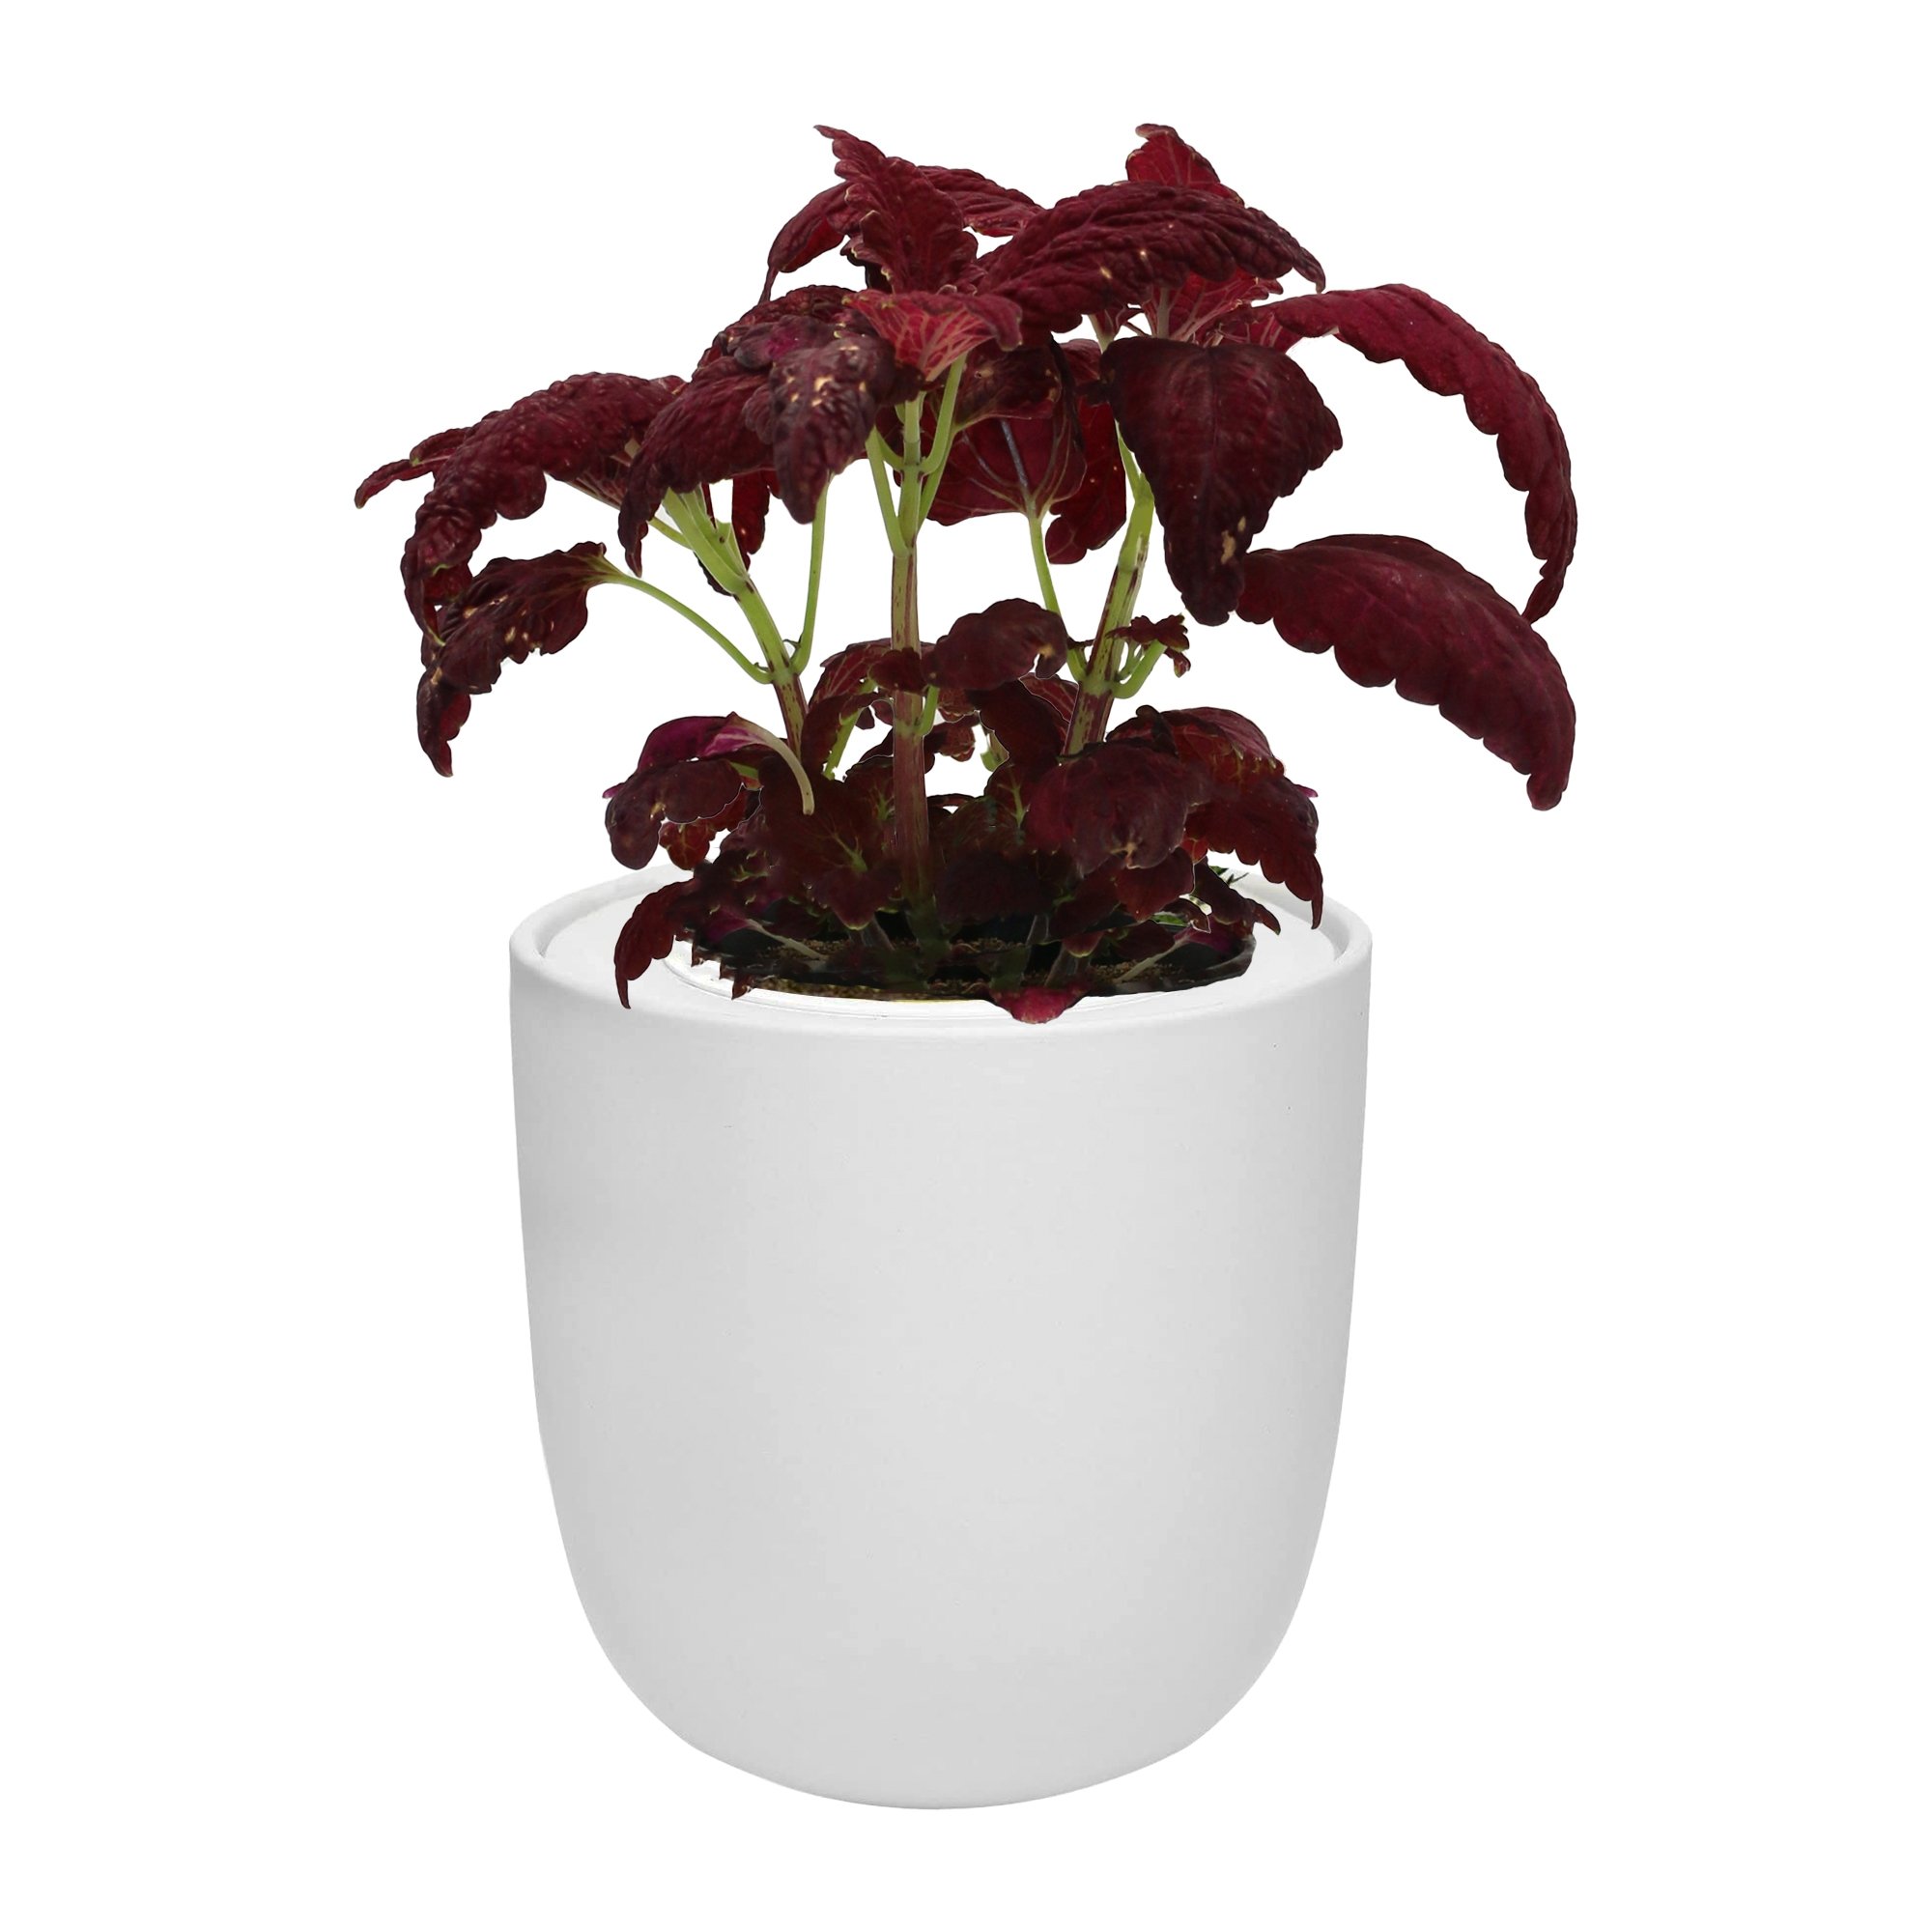 Coleus - Black Dragon White Ceramic Pot Hydroponic Growing Kit with Seeds